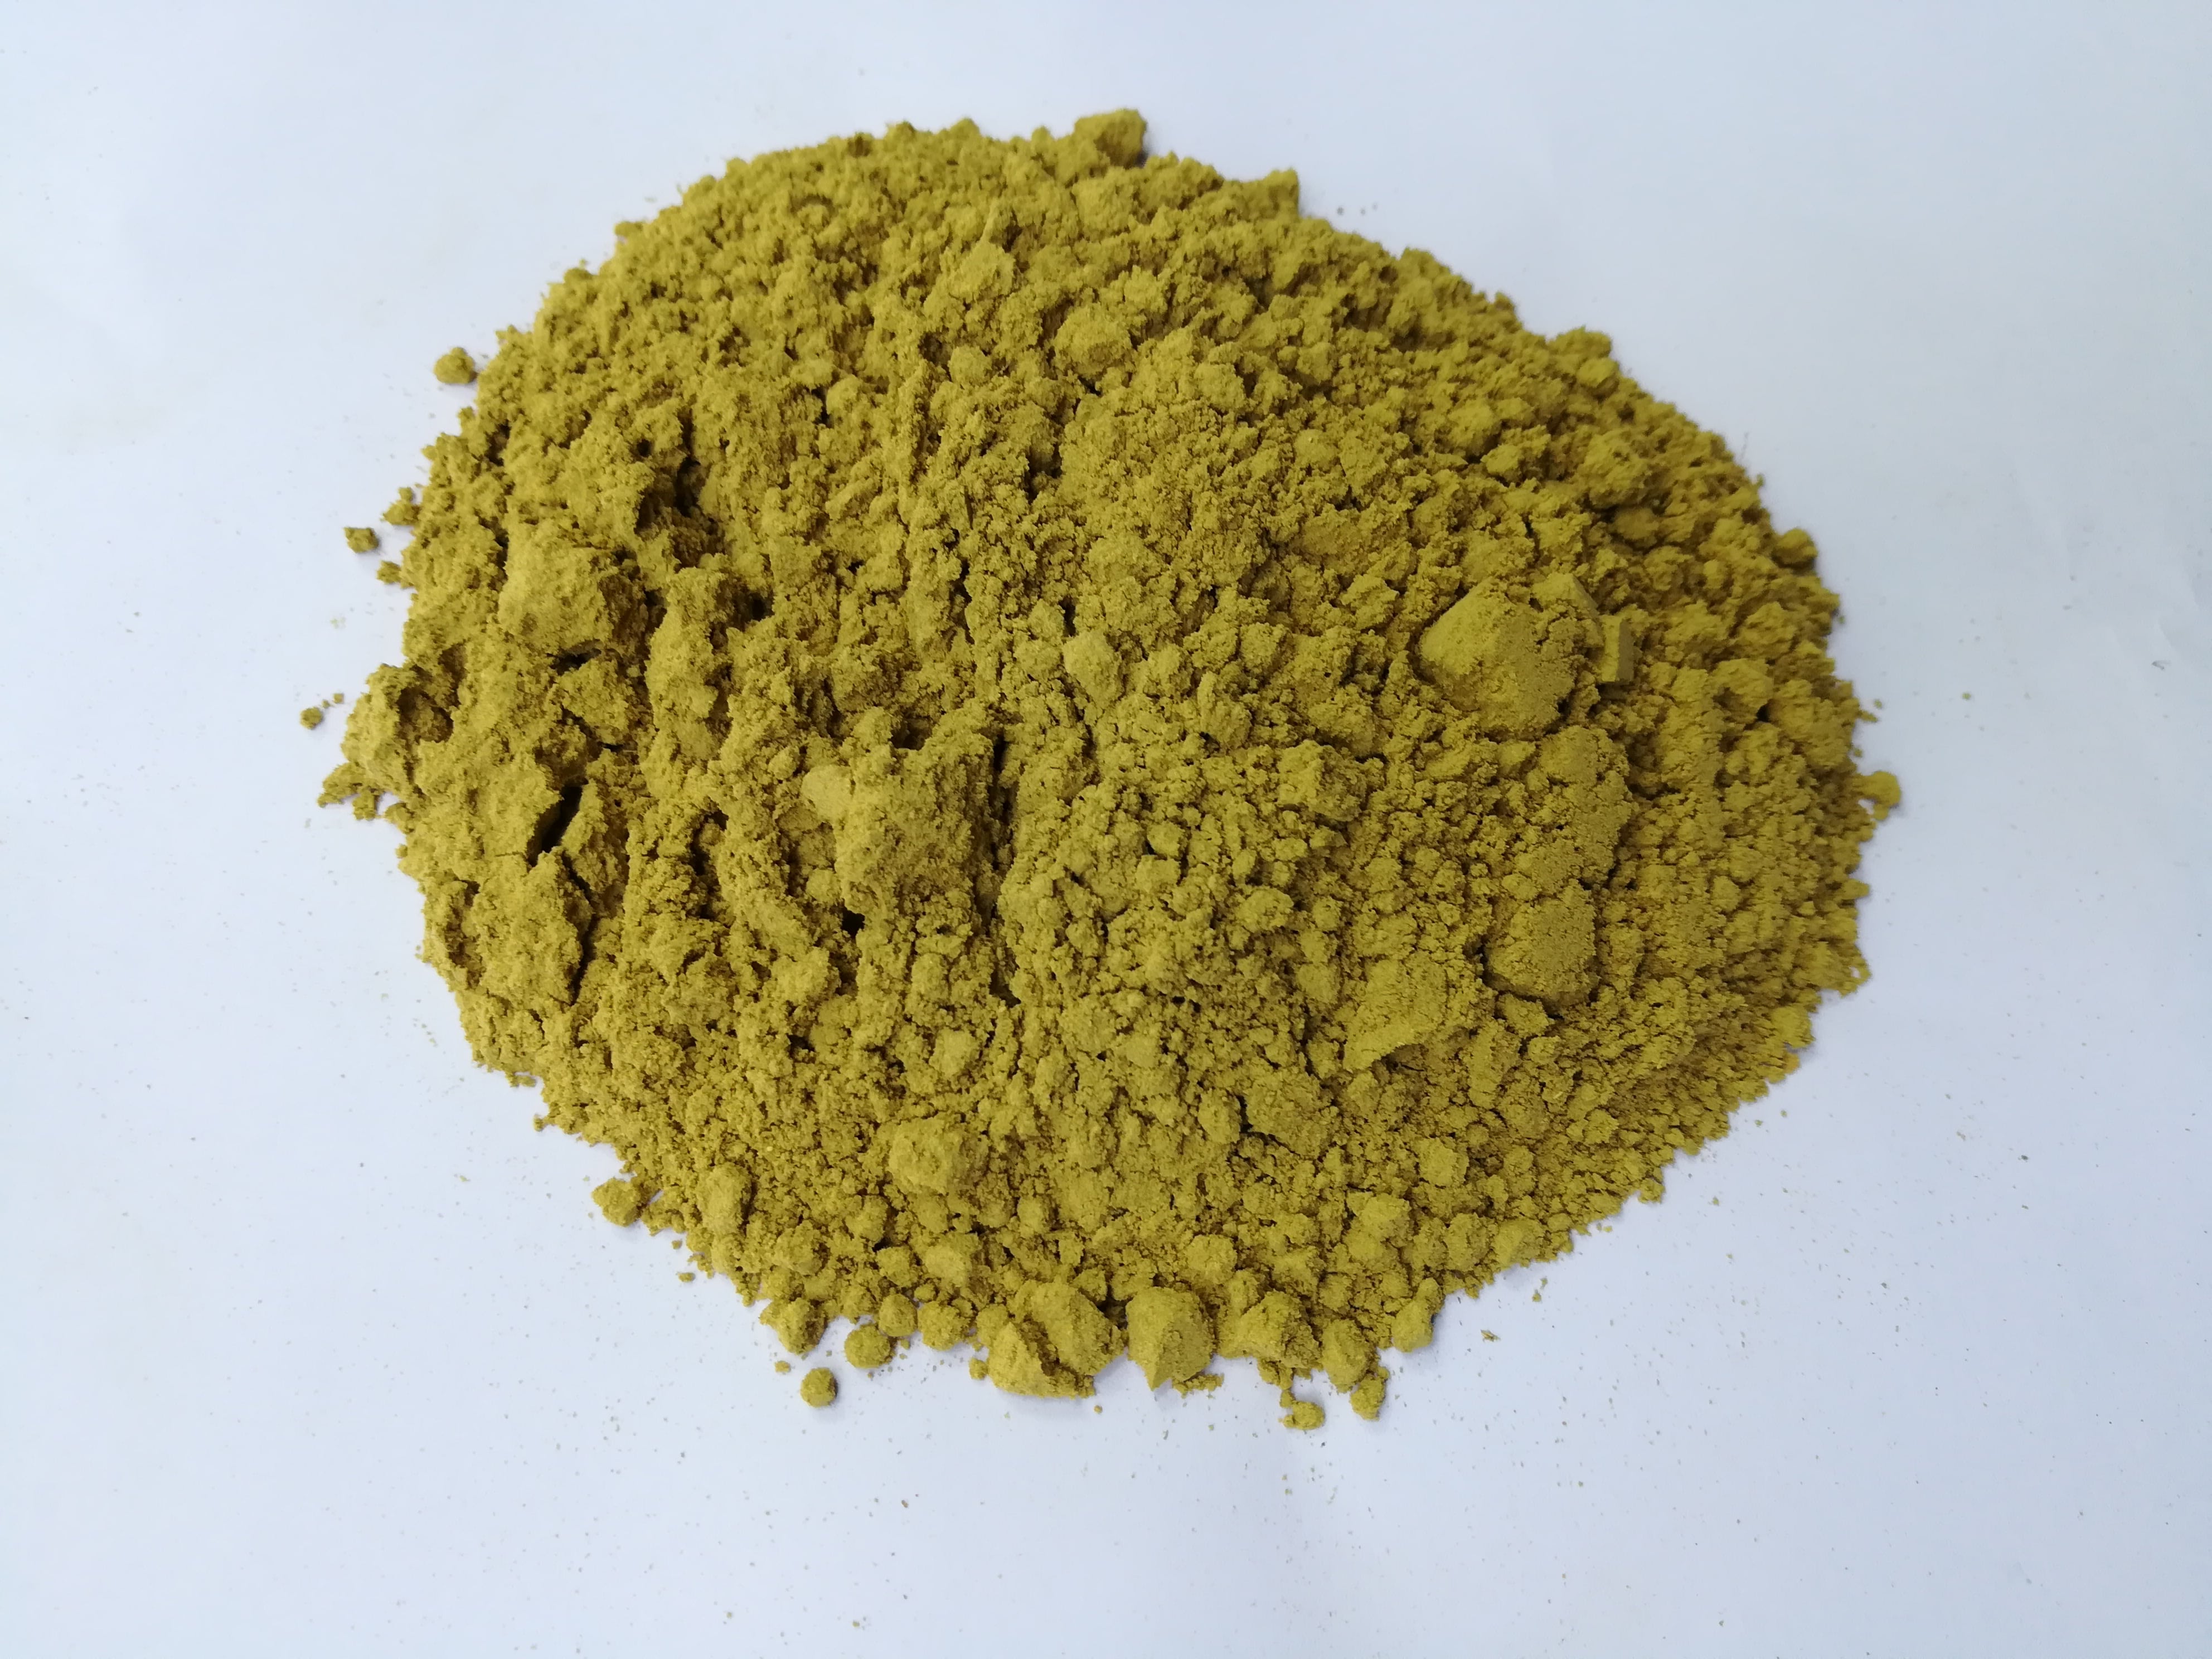 Dehydrated Green Chilli Powder